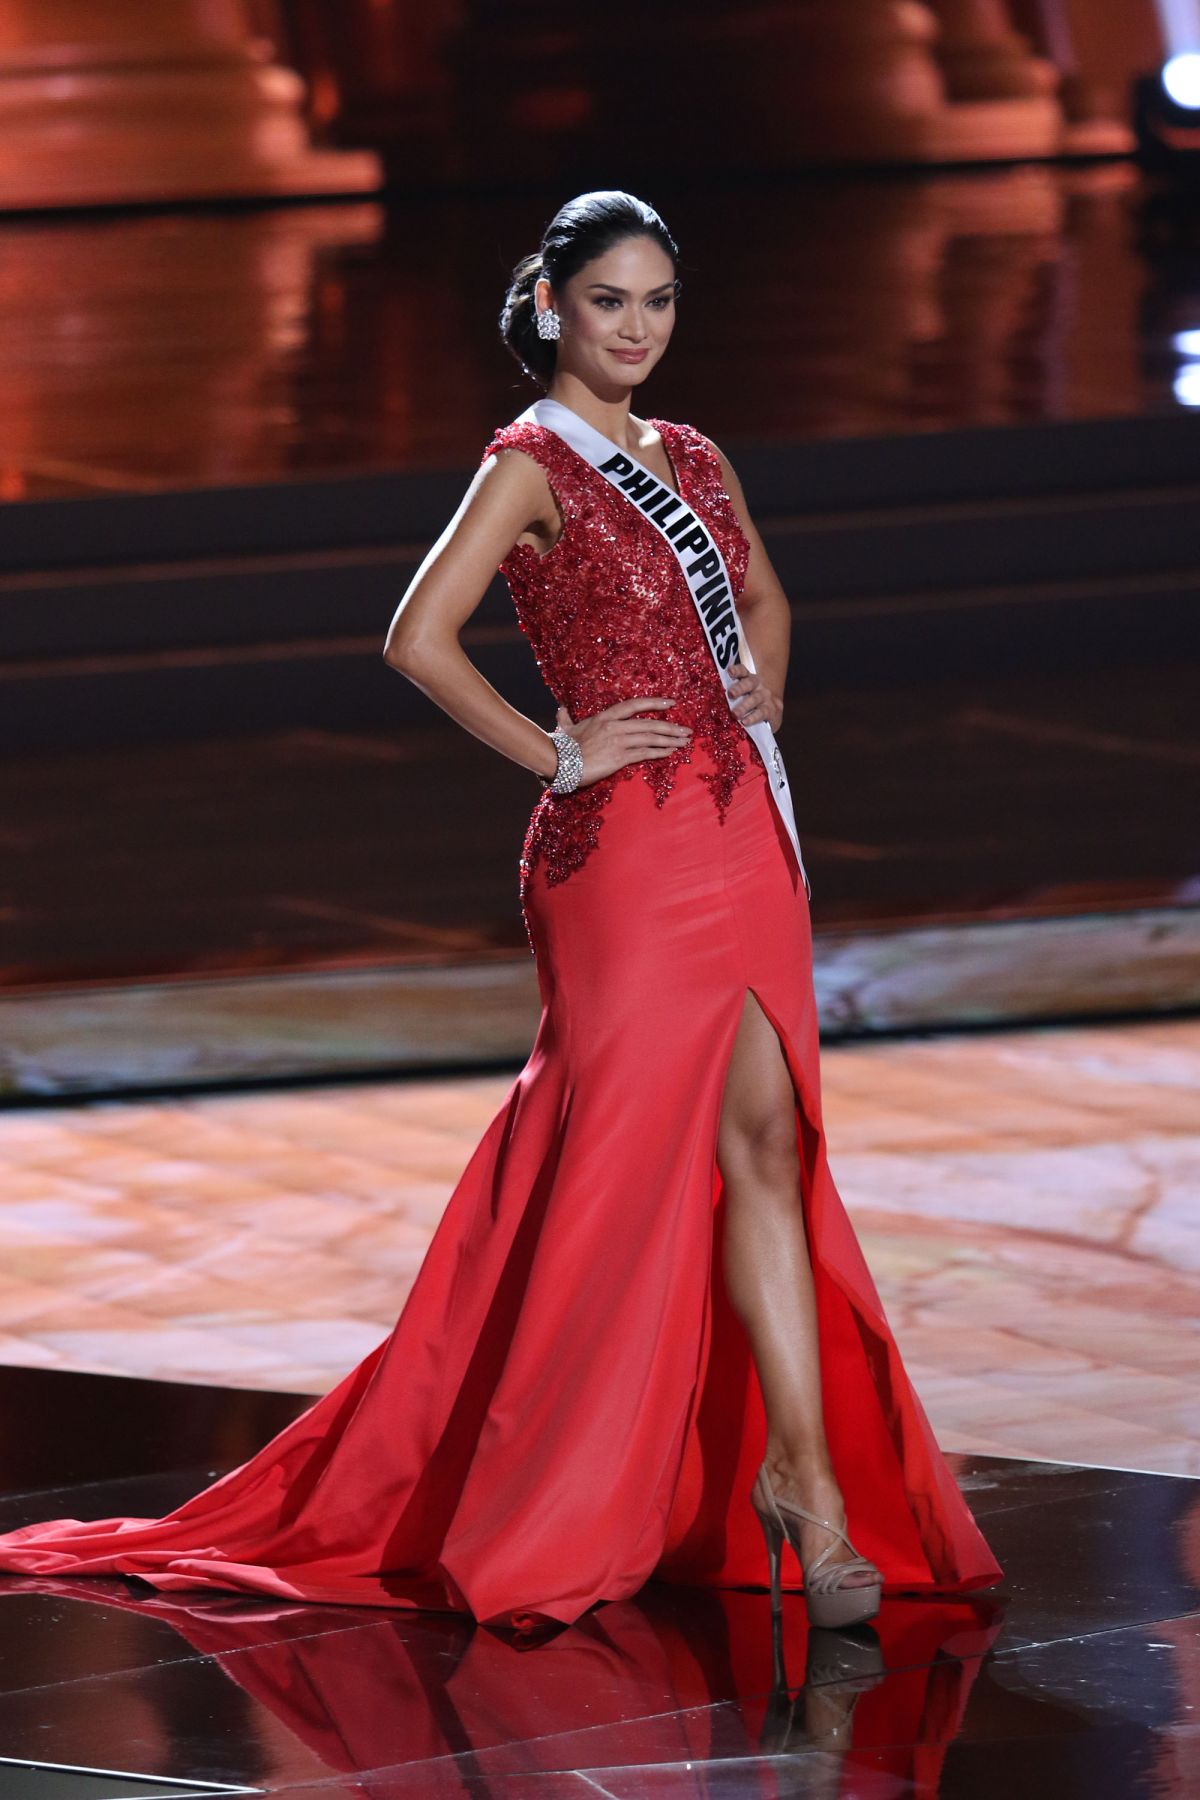 Pia Alonzo Wurtzbach Miss Universe 2015 Preliminary Round 12162015 Hawtcelebs